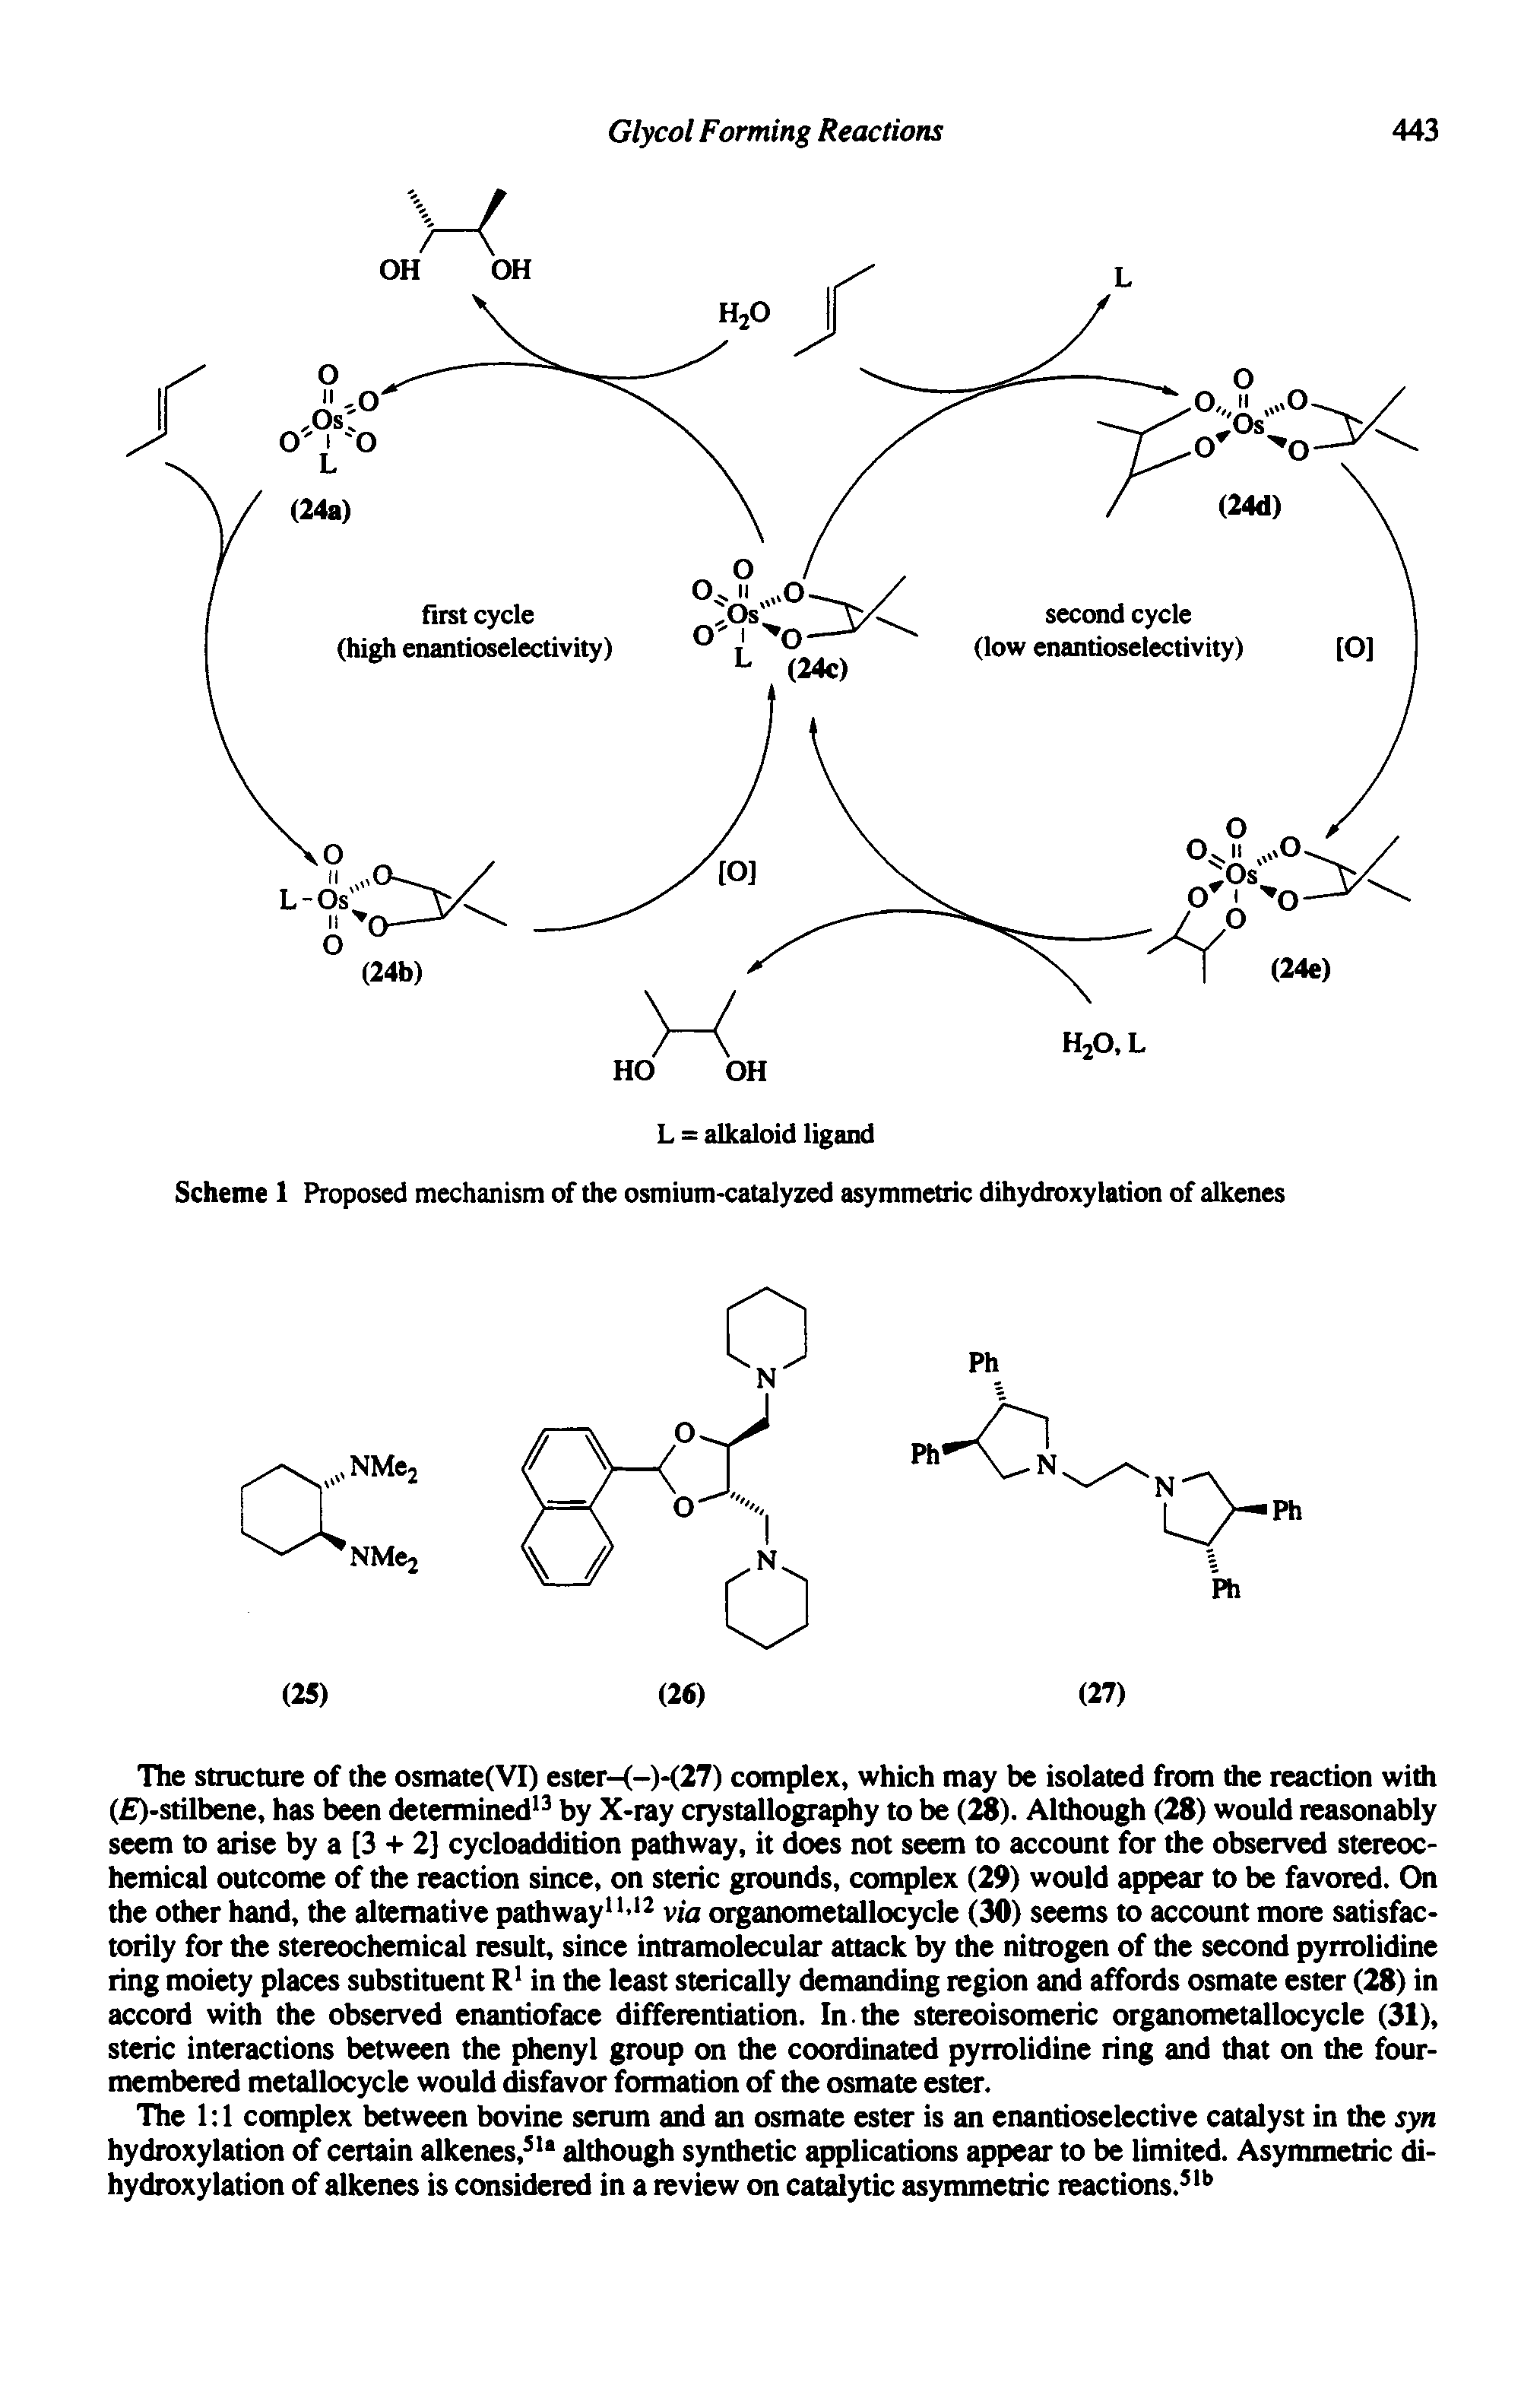 Scheme 1 Proposed mechanism of the osmium-catalyzed asymmetric dihydroxylation of alkenes...